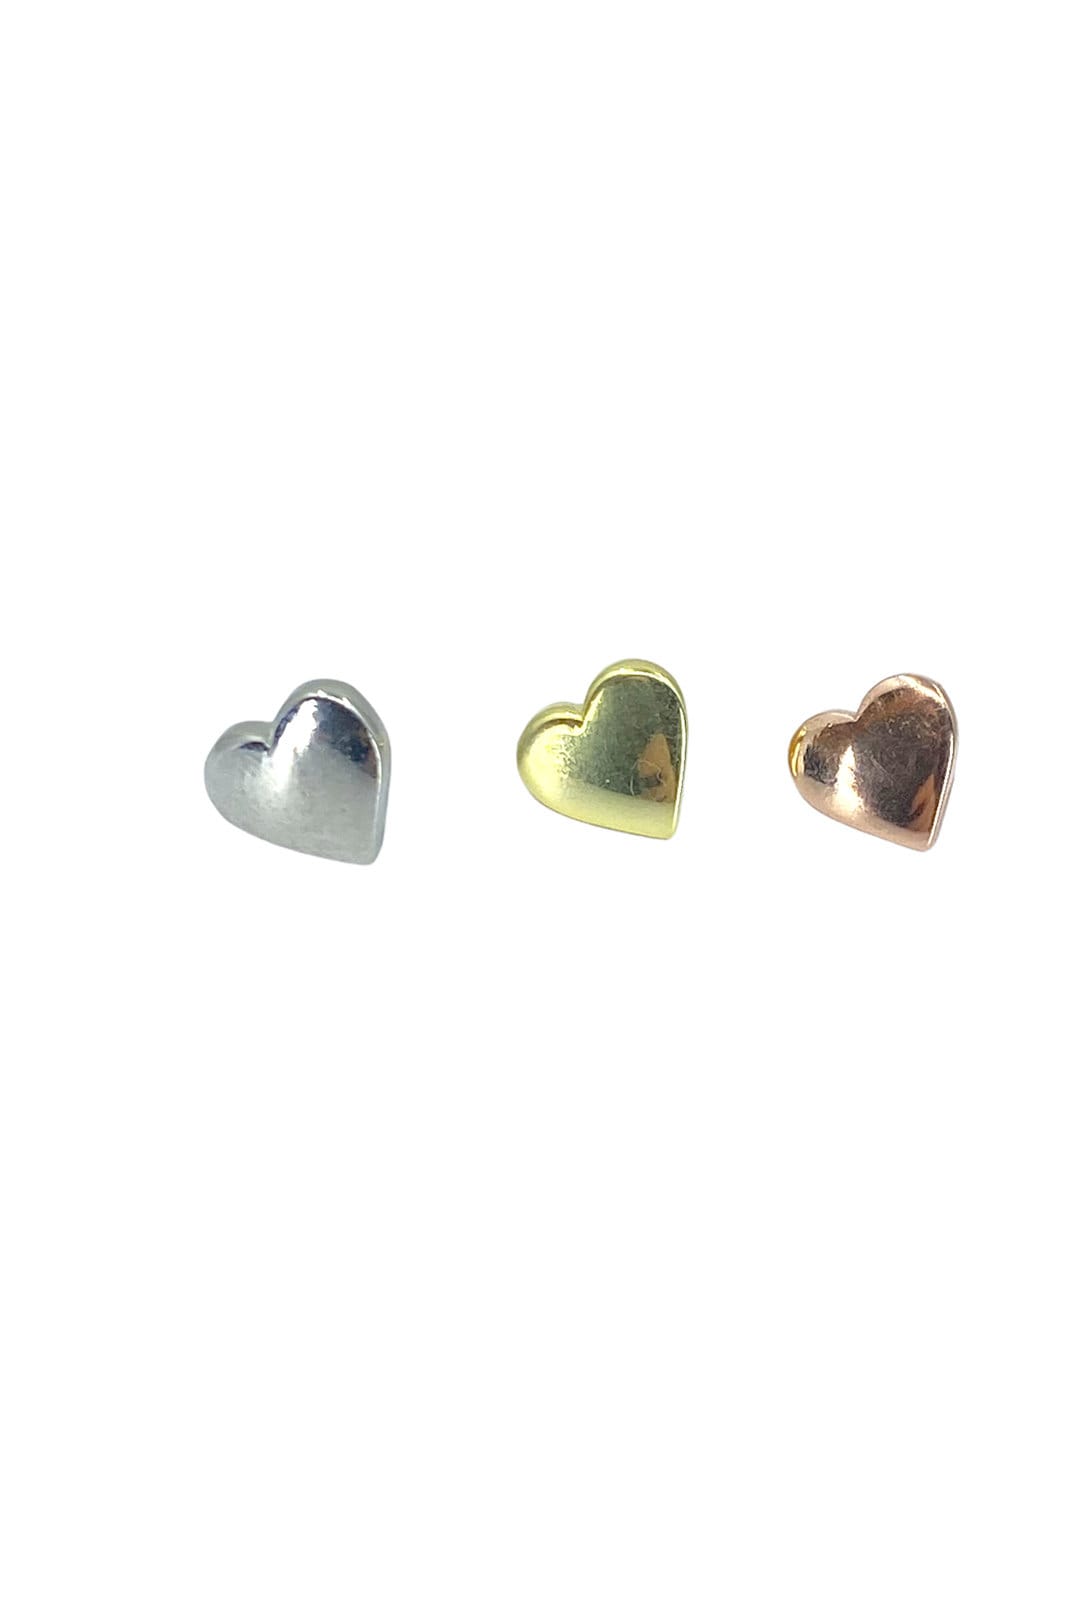 Push Pins, Gold & Silver Hearts, Heart Pushpins, Golden Antique